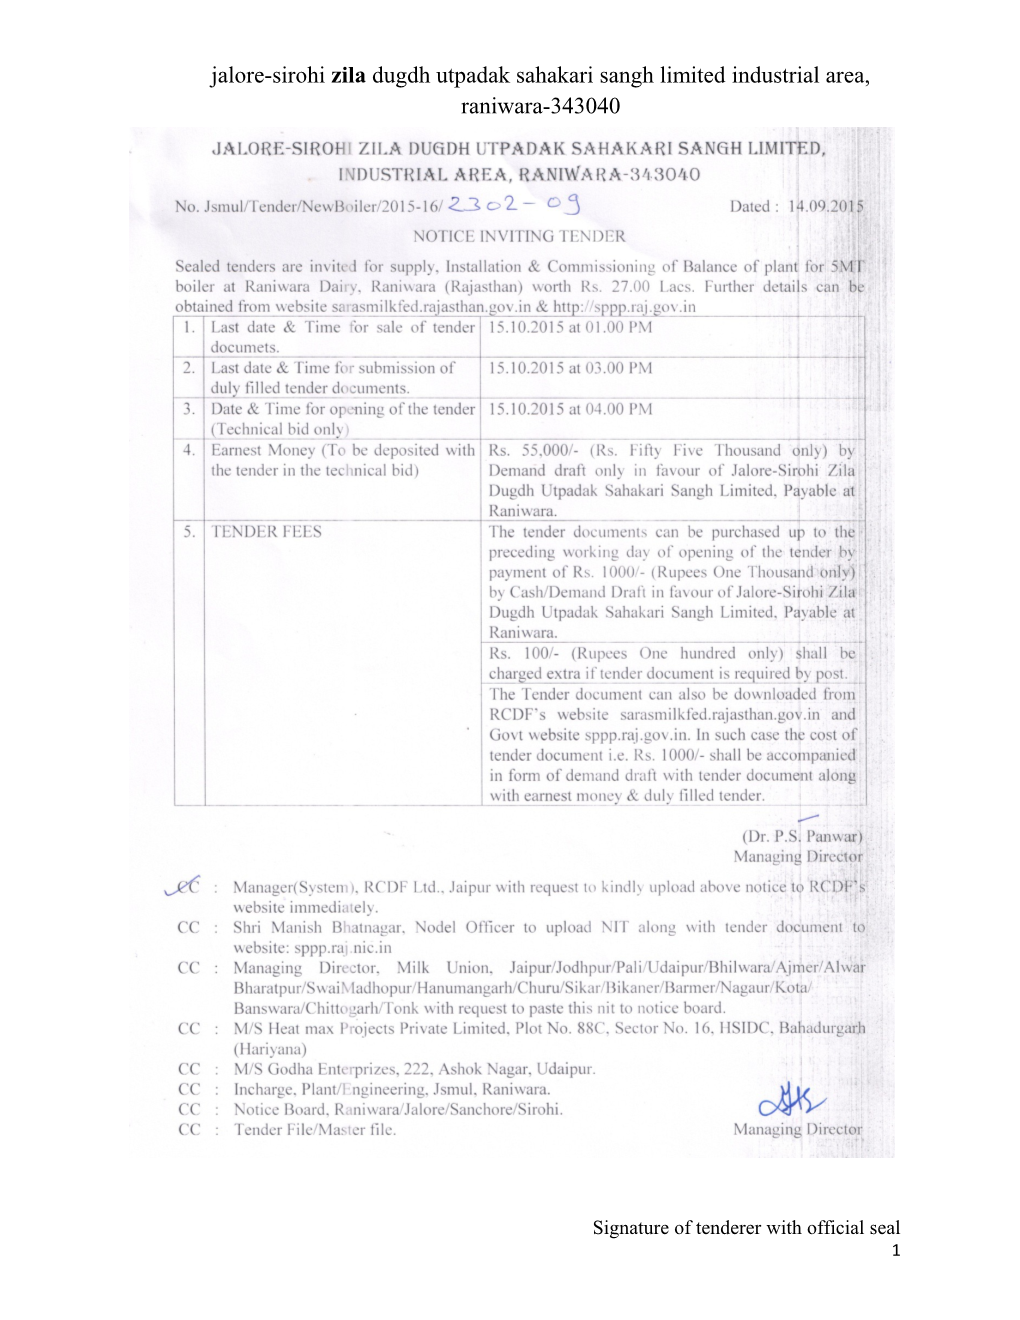 Jalore-Sirohi Zila Dugdh Utpadak Sahakari Sangh Limited Industrial Area, Raniwara-343040